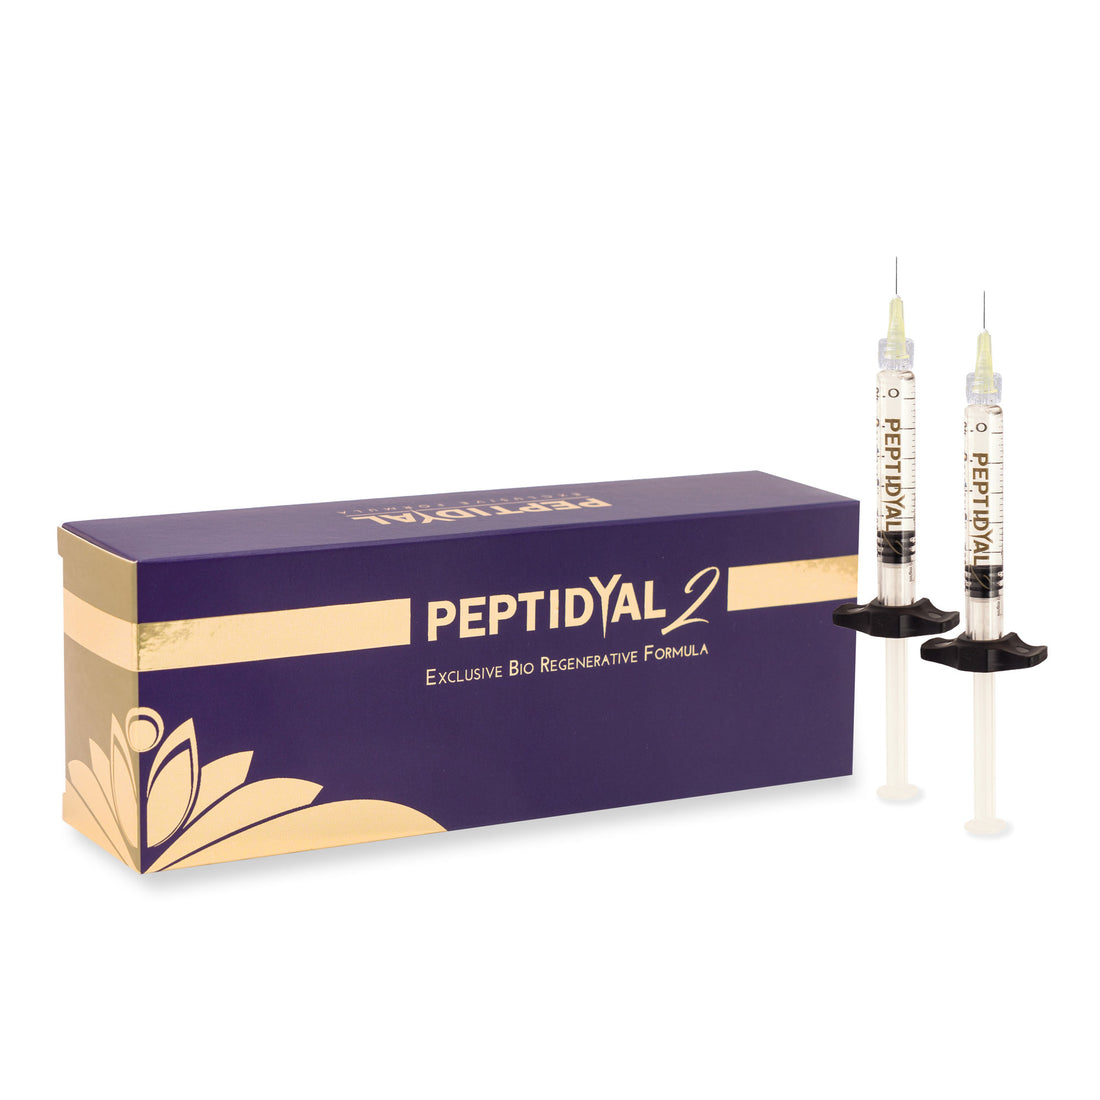 Peptidyal 2 - Formule Bio Régénérative Exclusive